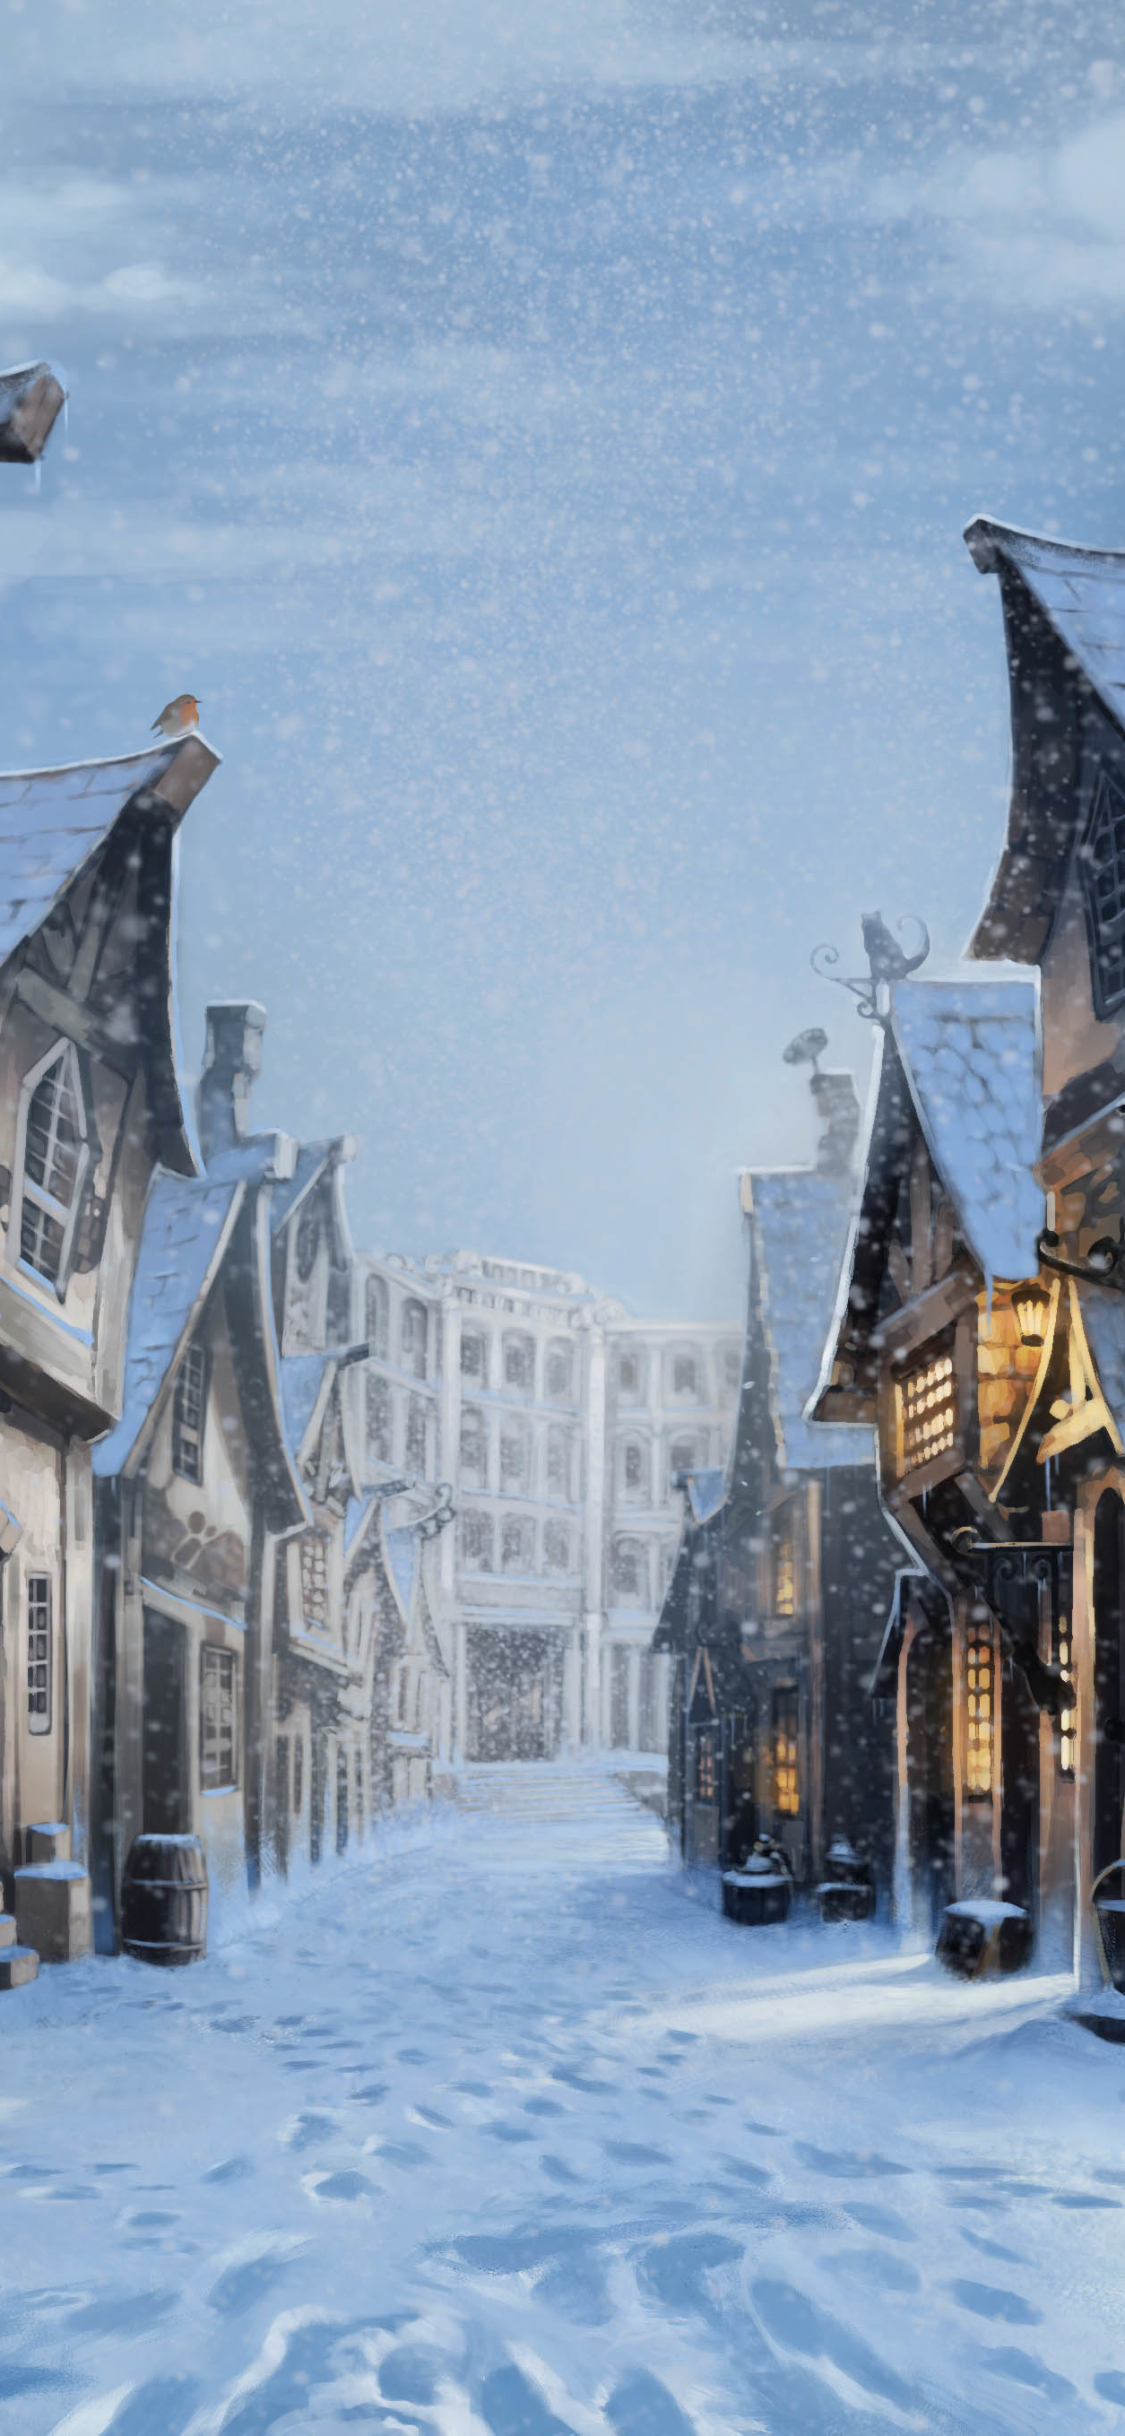 Descarga gratuita de fondo de pantalla para móvil de Invierno, Nieve, Harry Potter, Casa, Artístico, Callejón Diagón.